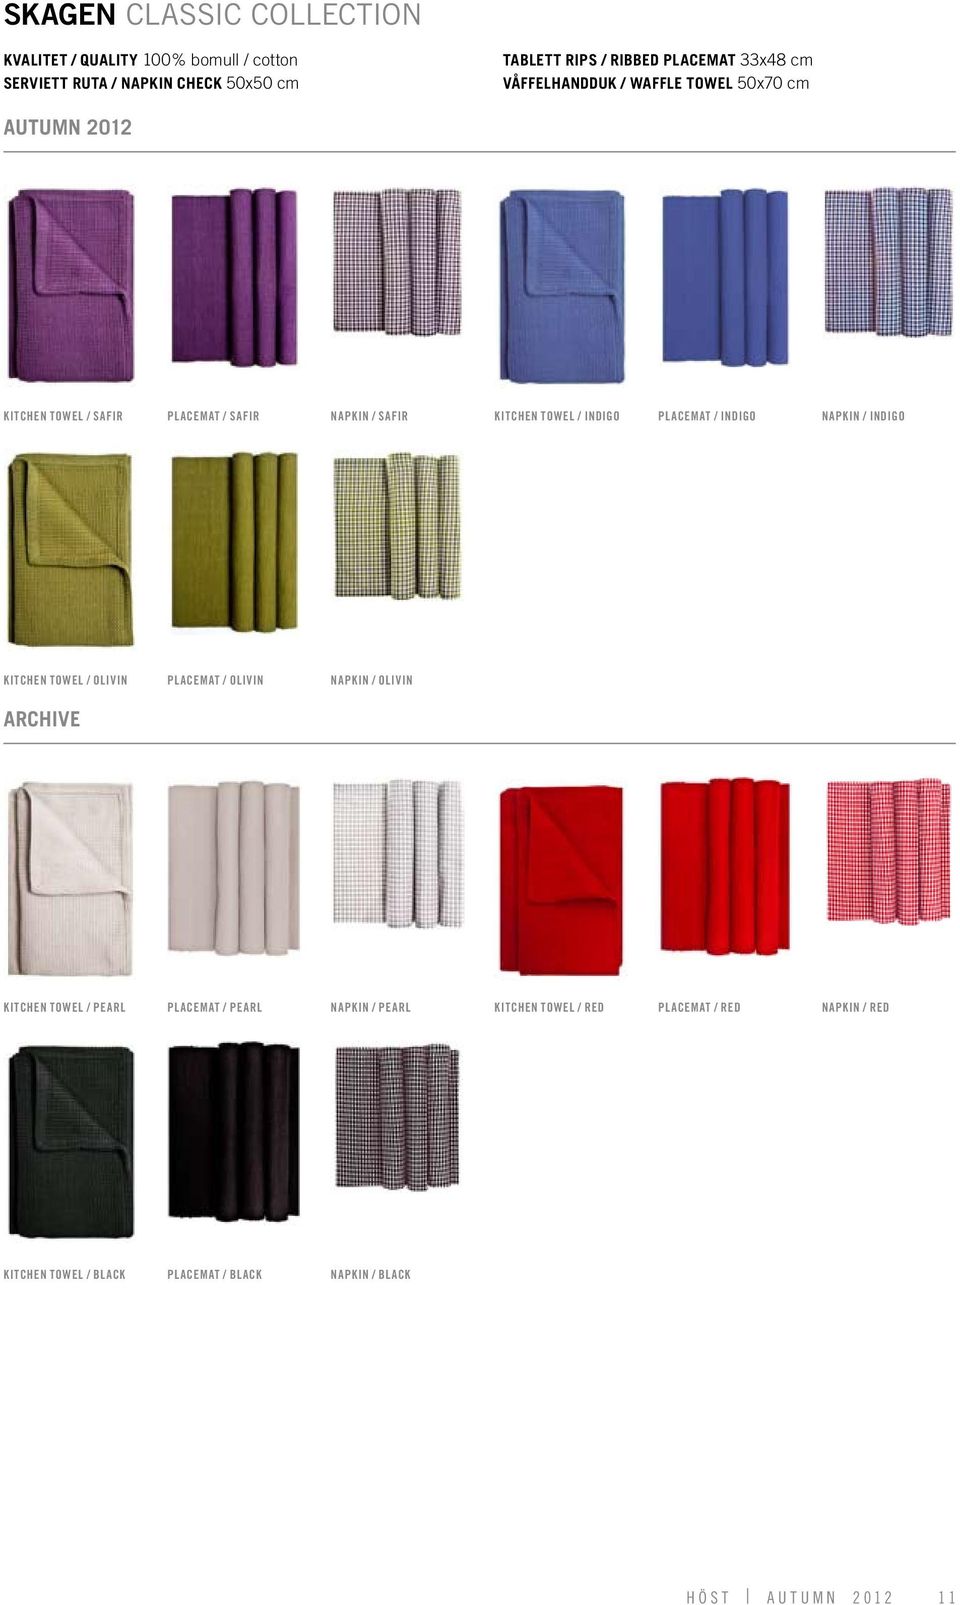 indigo placemat / indigo napkin / indigo kitchen towel / olivin placemat / olivin napkin / olivin kitchen towel / pearl placemat /